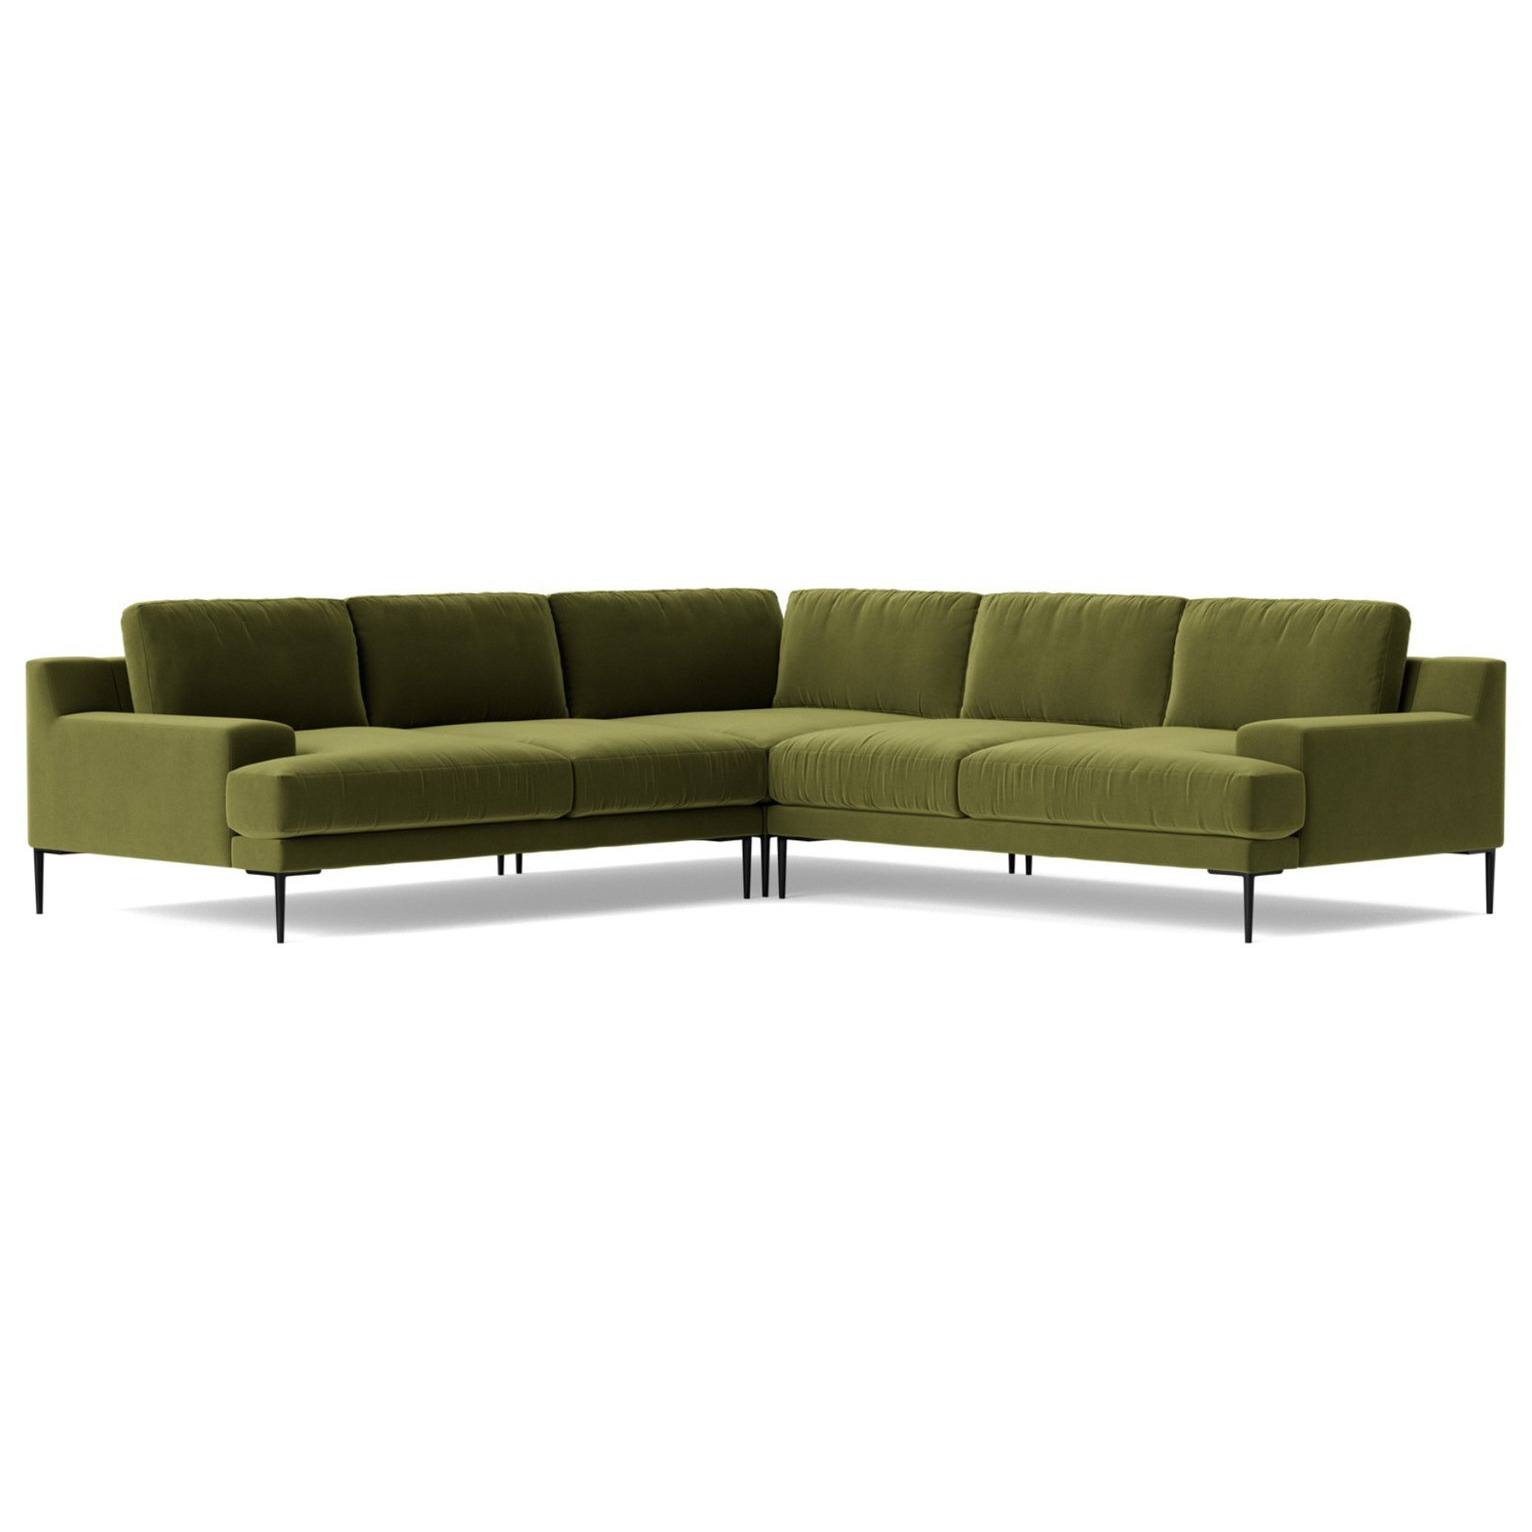 Swoon Almera Velvet 5 Seater Corner Sofa - Fern Green - image 1